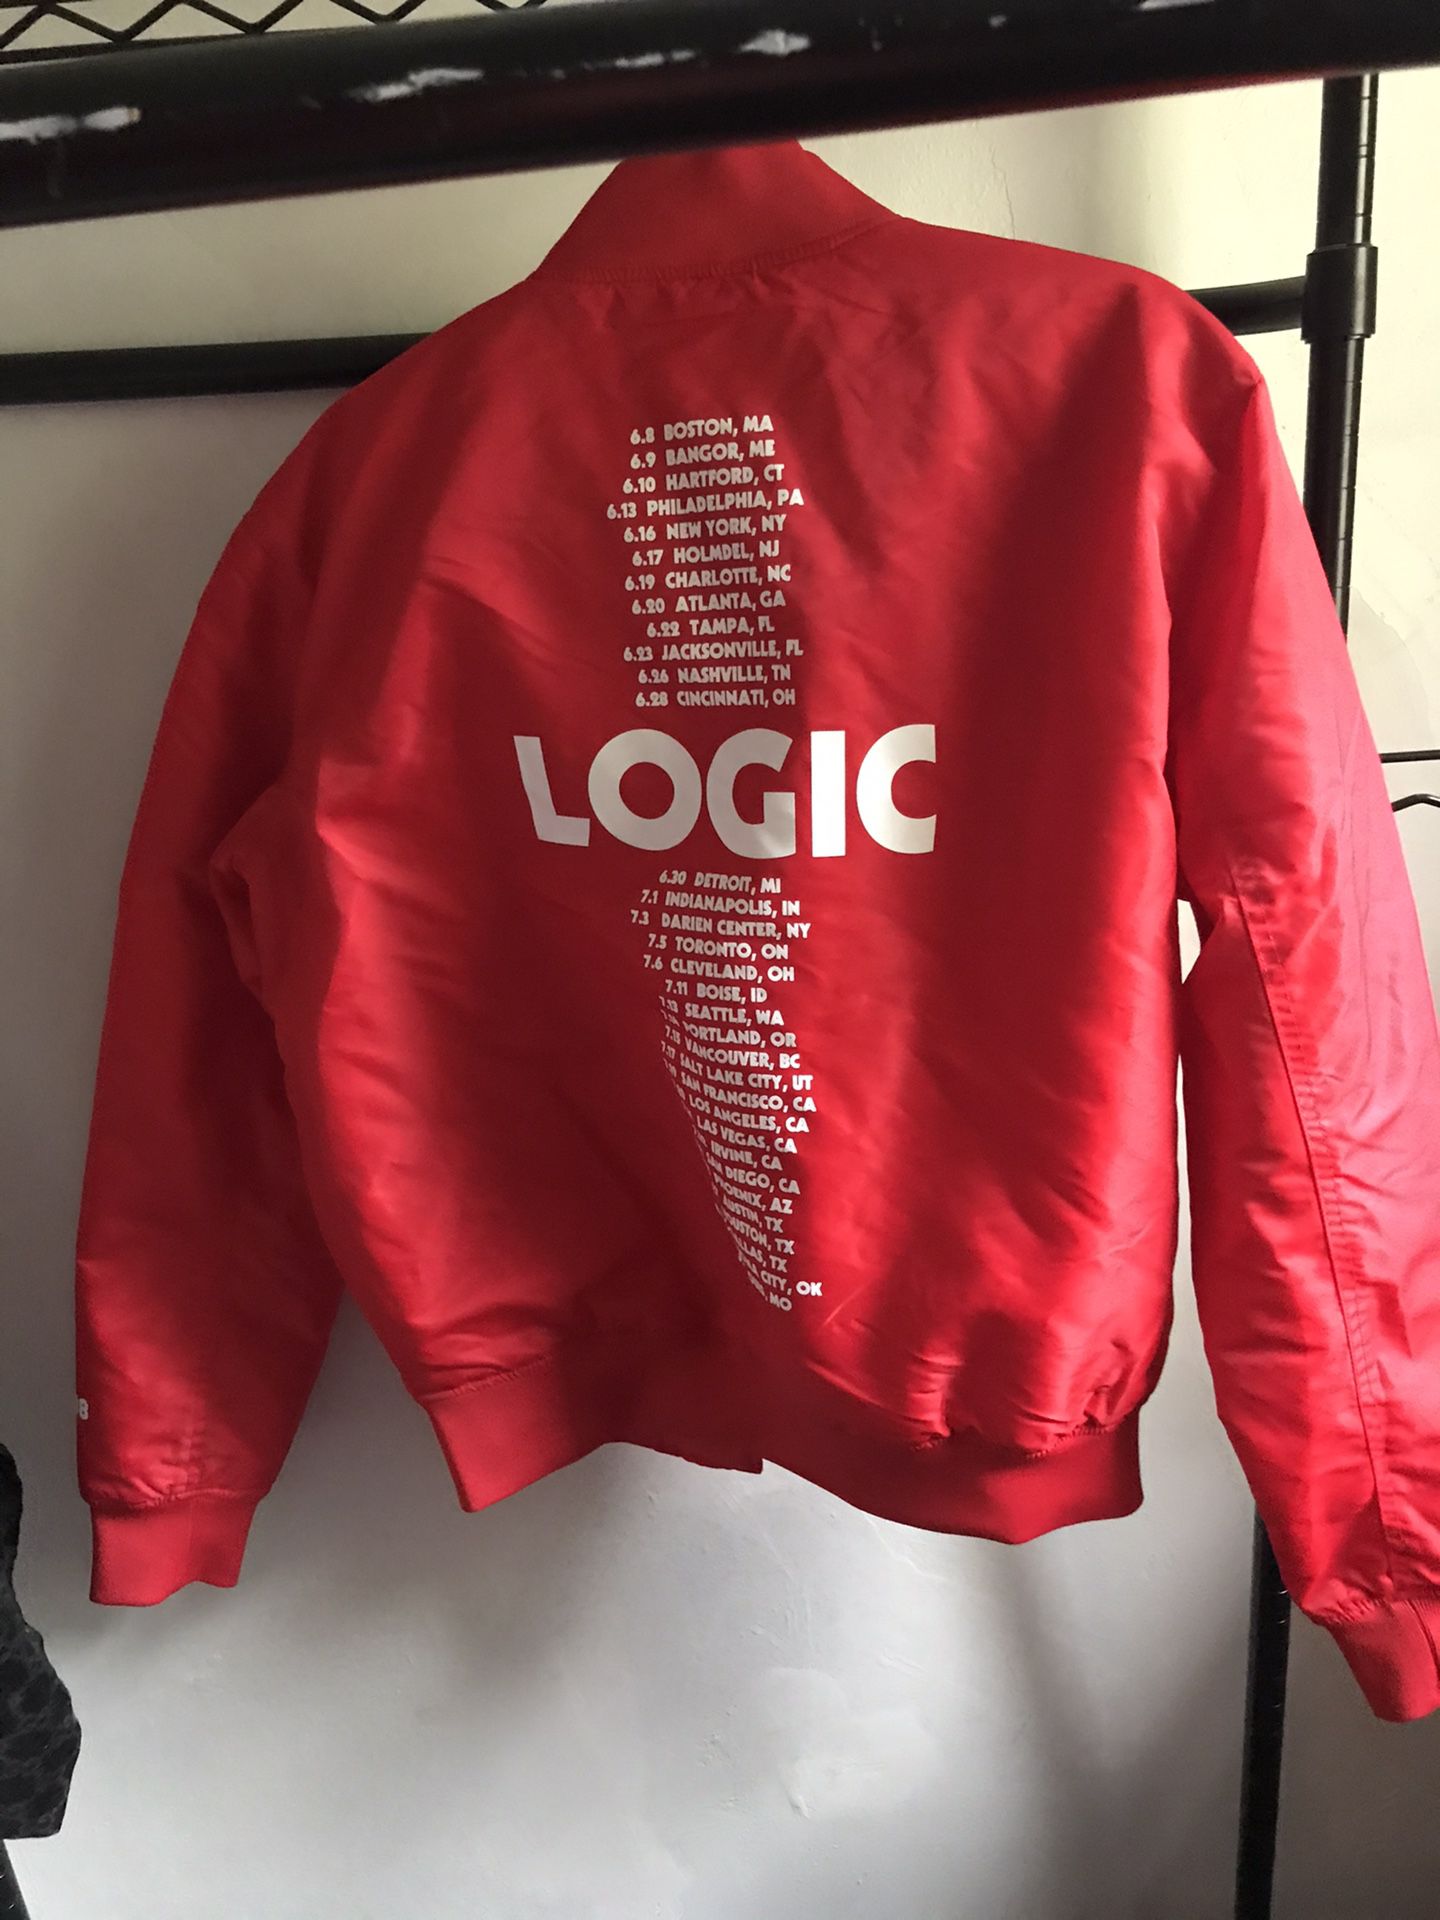 Logic tour jacket